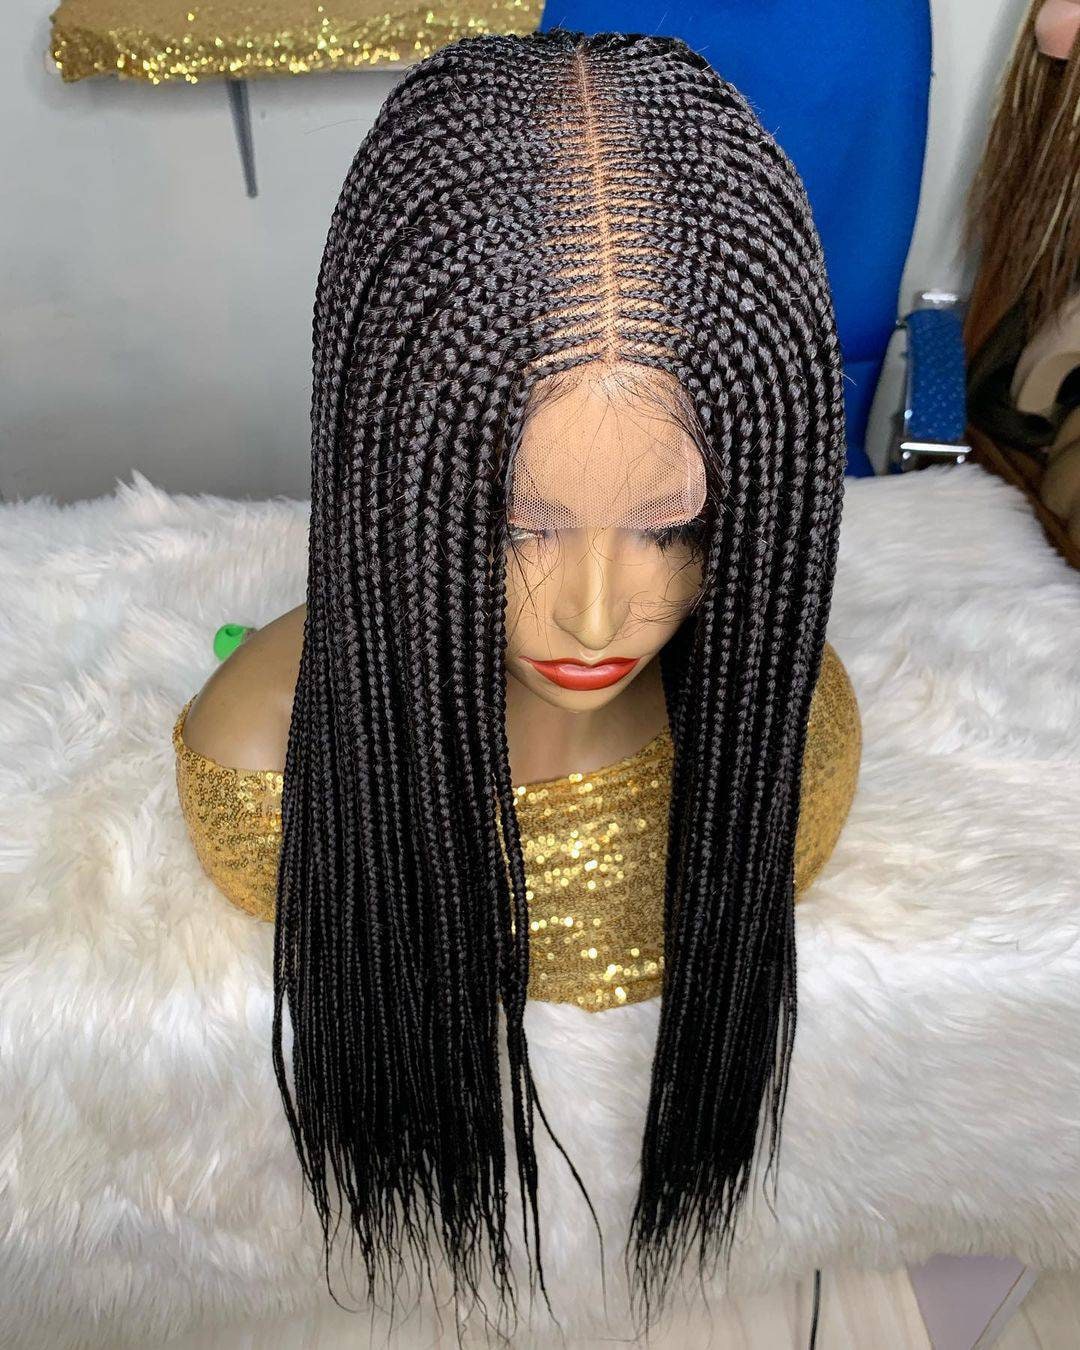 Kim K 2 by 6 Cornrow Lace Front Wig Handmade Box Braid Wig for Black Women - Knotless Braids, Faux Locs, Dreadlocks, and Micro Braids